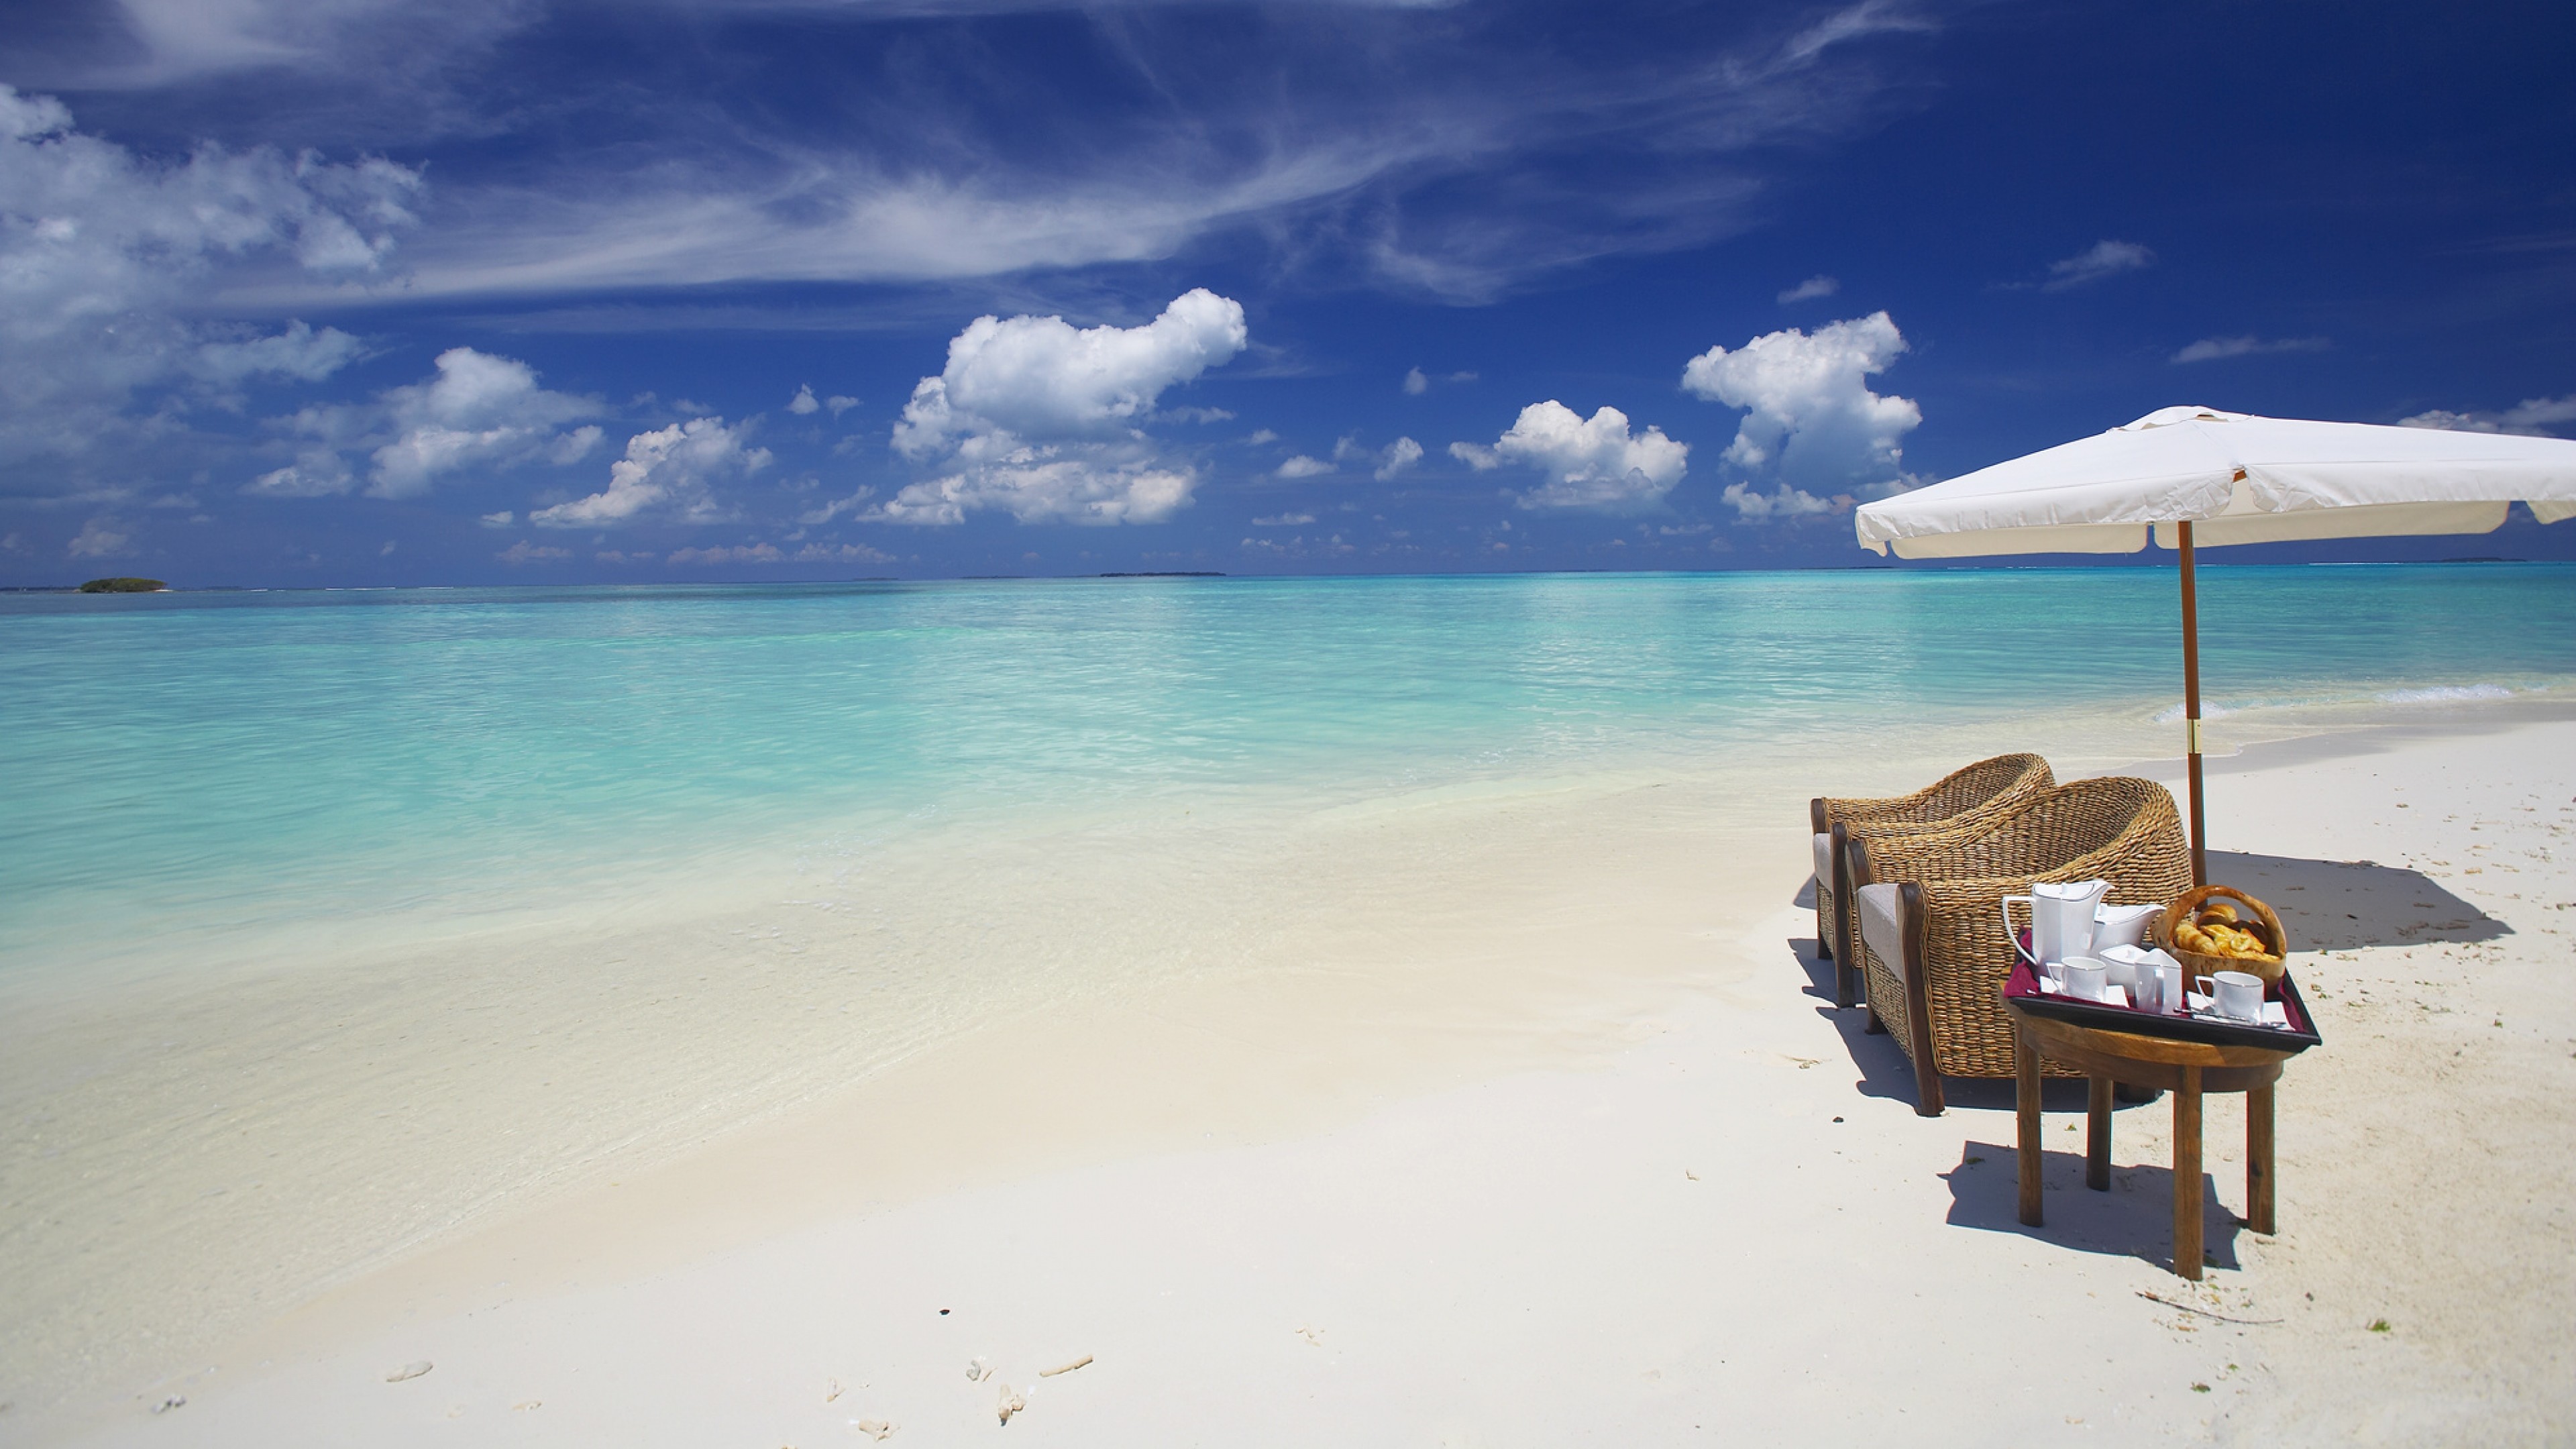 3840x2160  Wallpaper maldives, ocean, beach, sand, water, clouds, umbrella